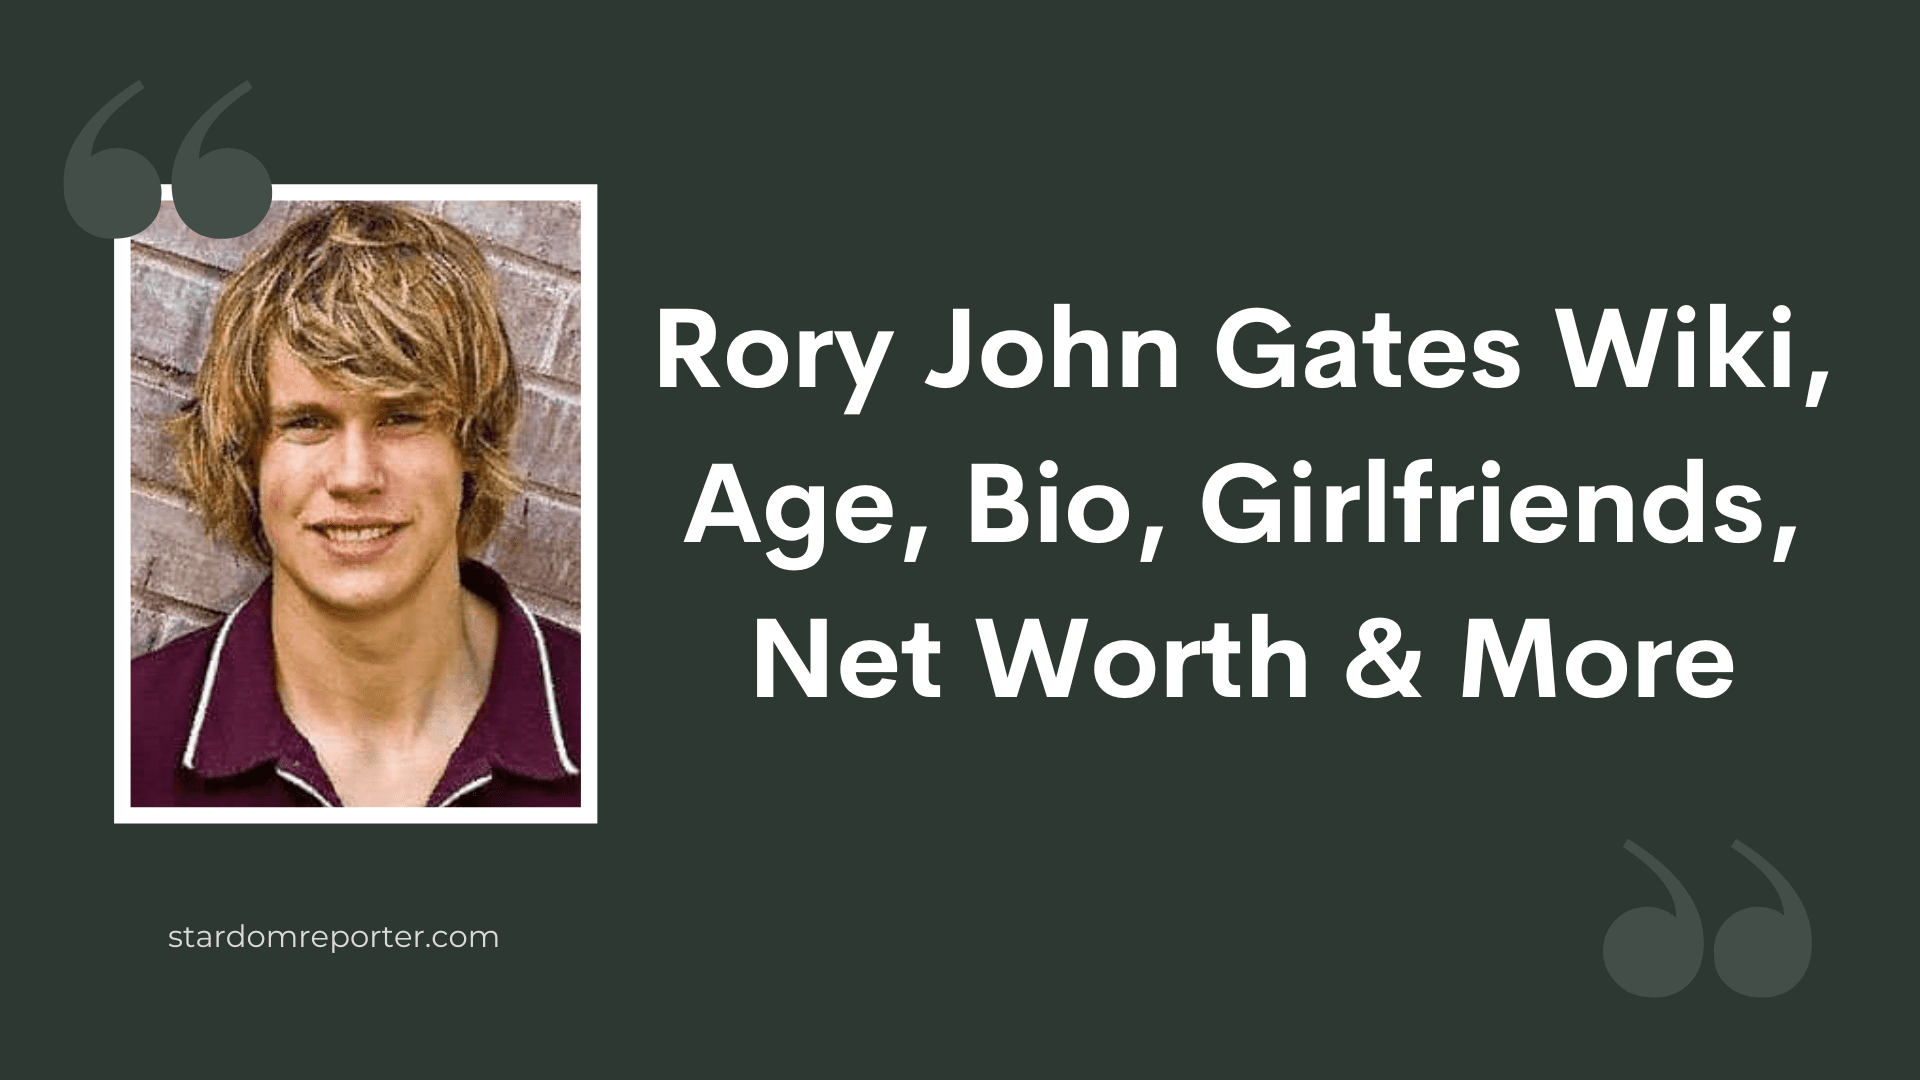 Rory John Gates Wiki, Age, Bio, Girlfriends, Net Worth & More - 15